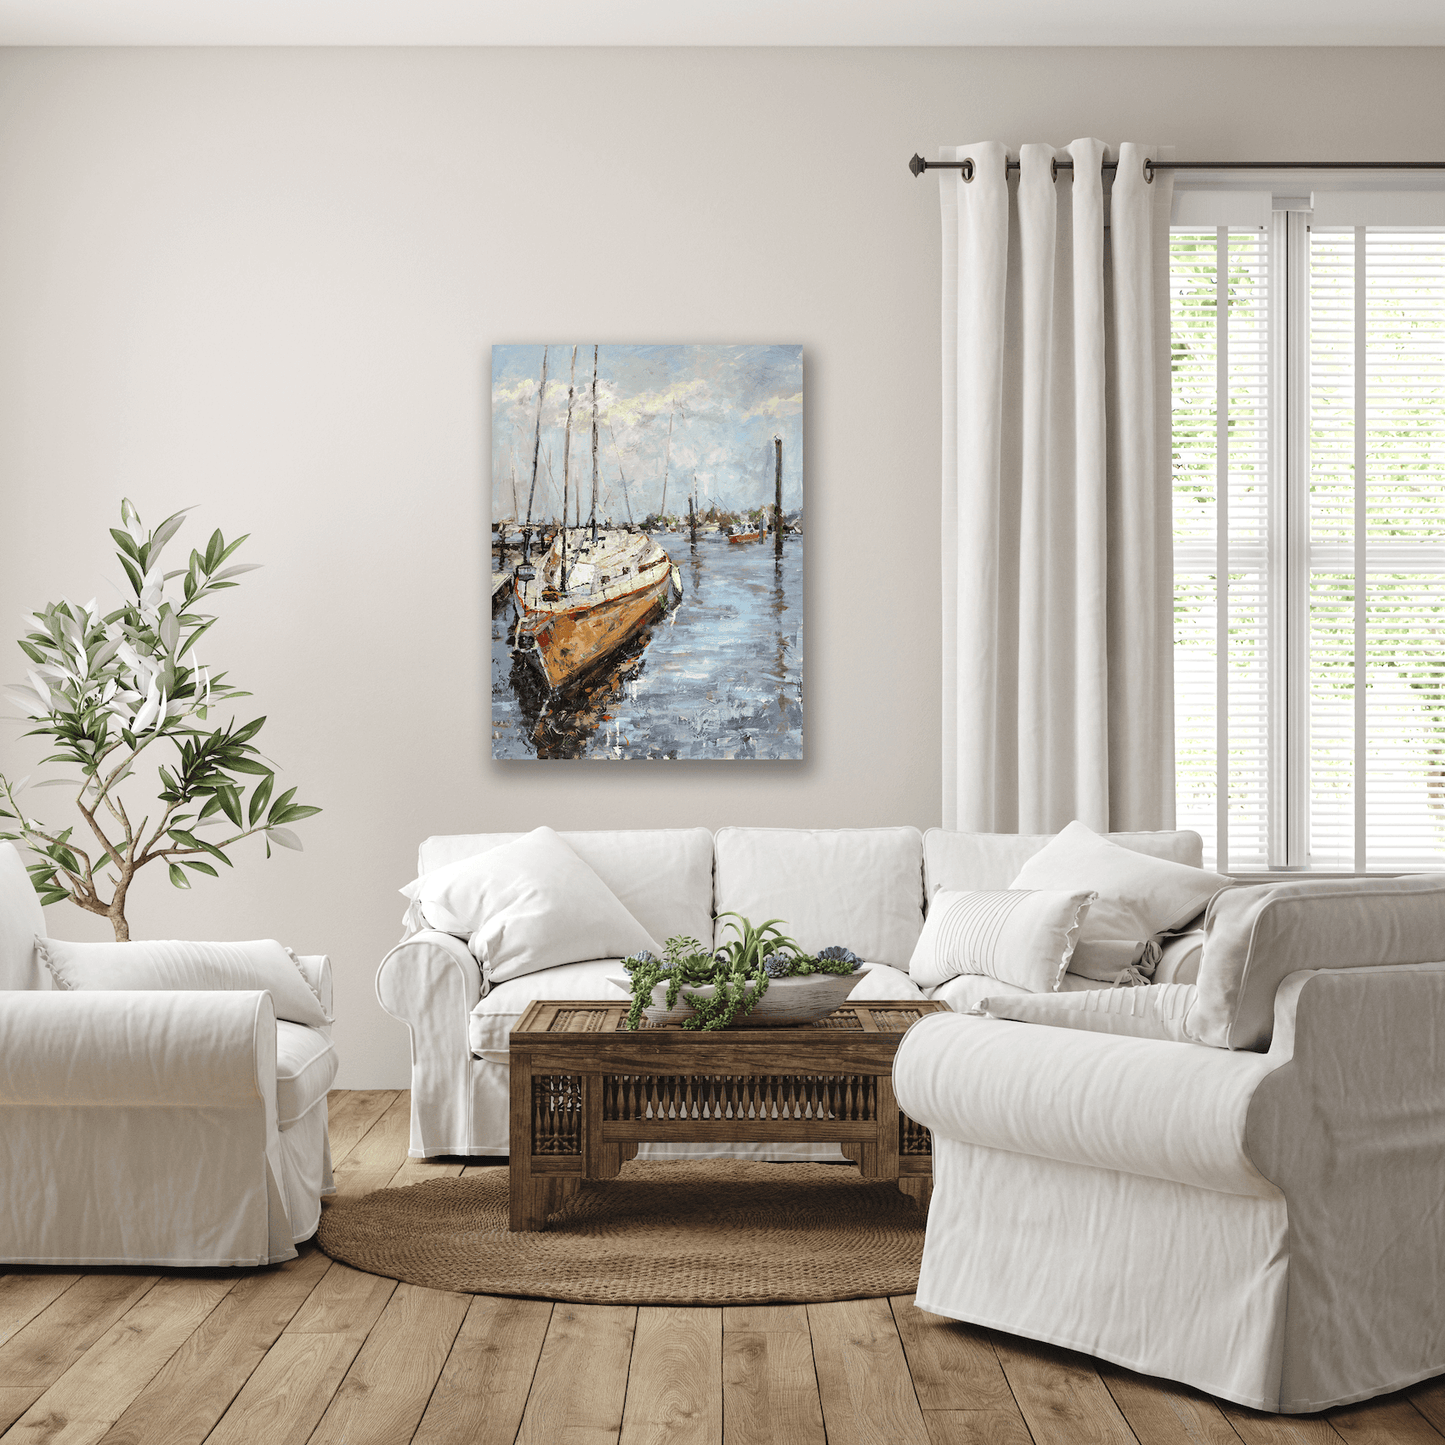 Let Go and Sail Artist Enhanced Canvas Print